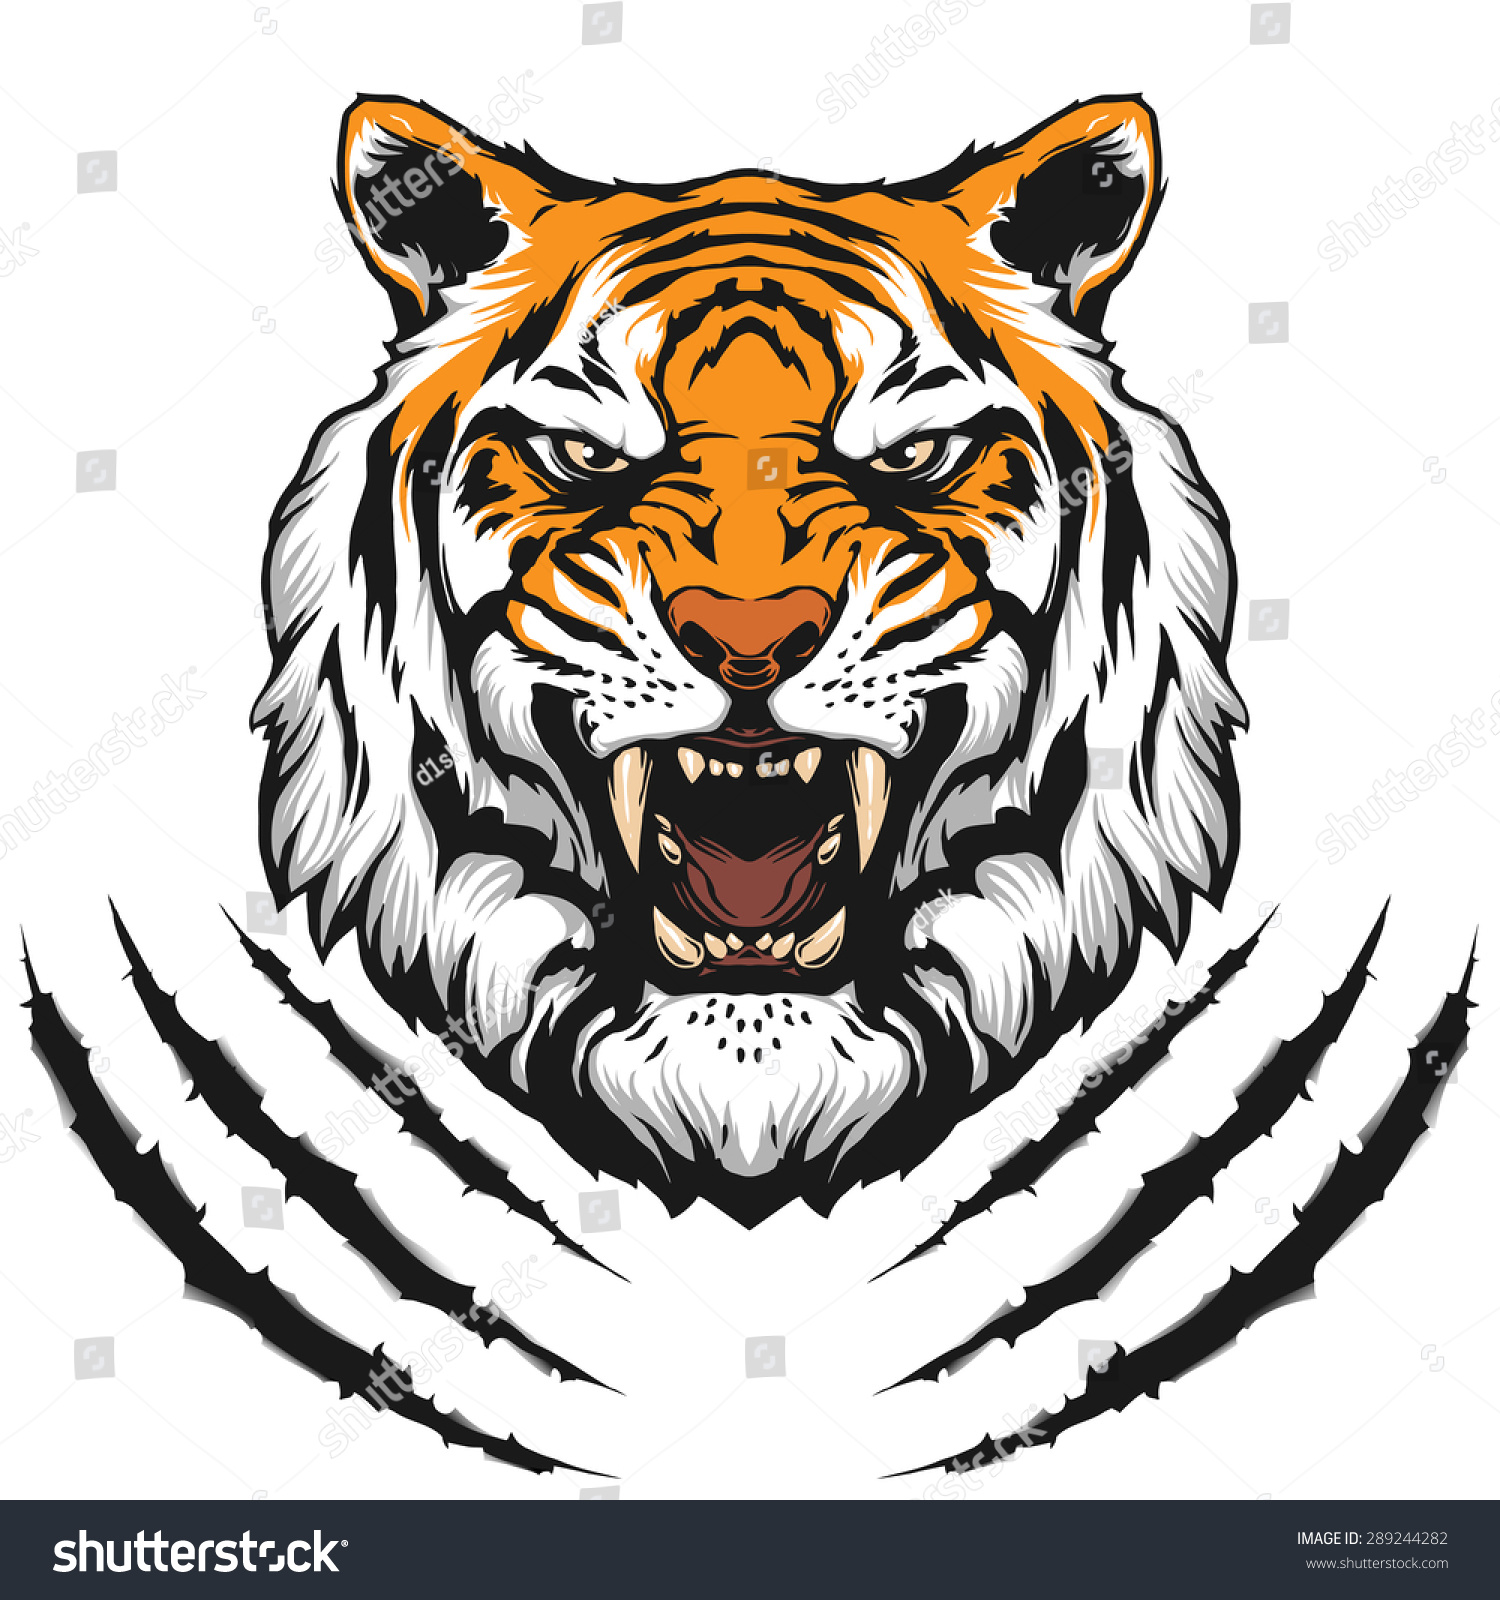 tiger roar clipart - photo #3